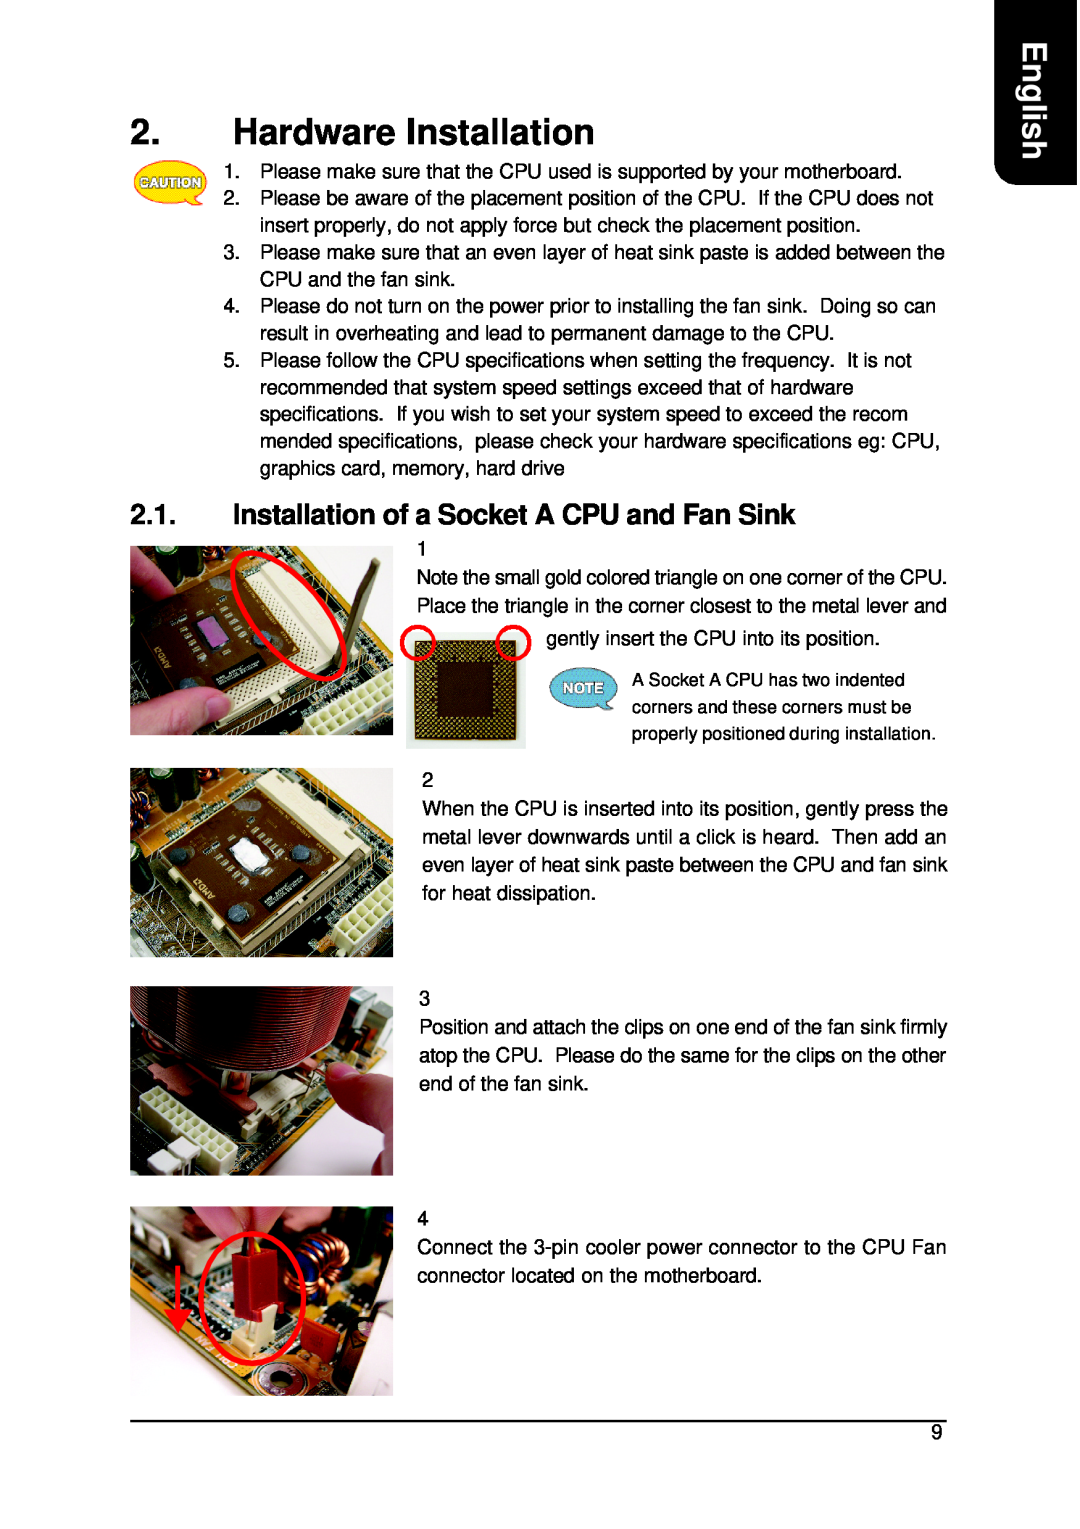 AMD XP-K7V400 user manual Hardware Installation, Installation of a Socket A CPU and Fan Sink, English 